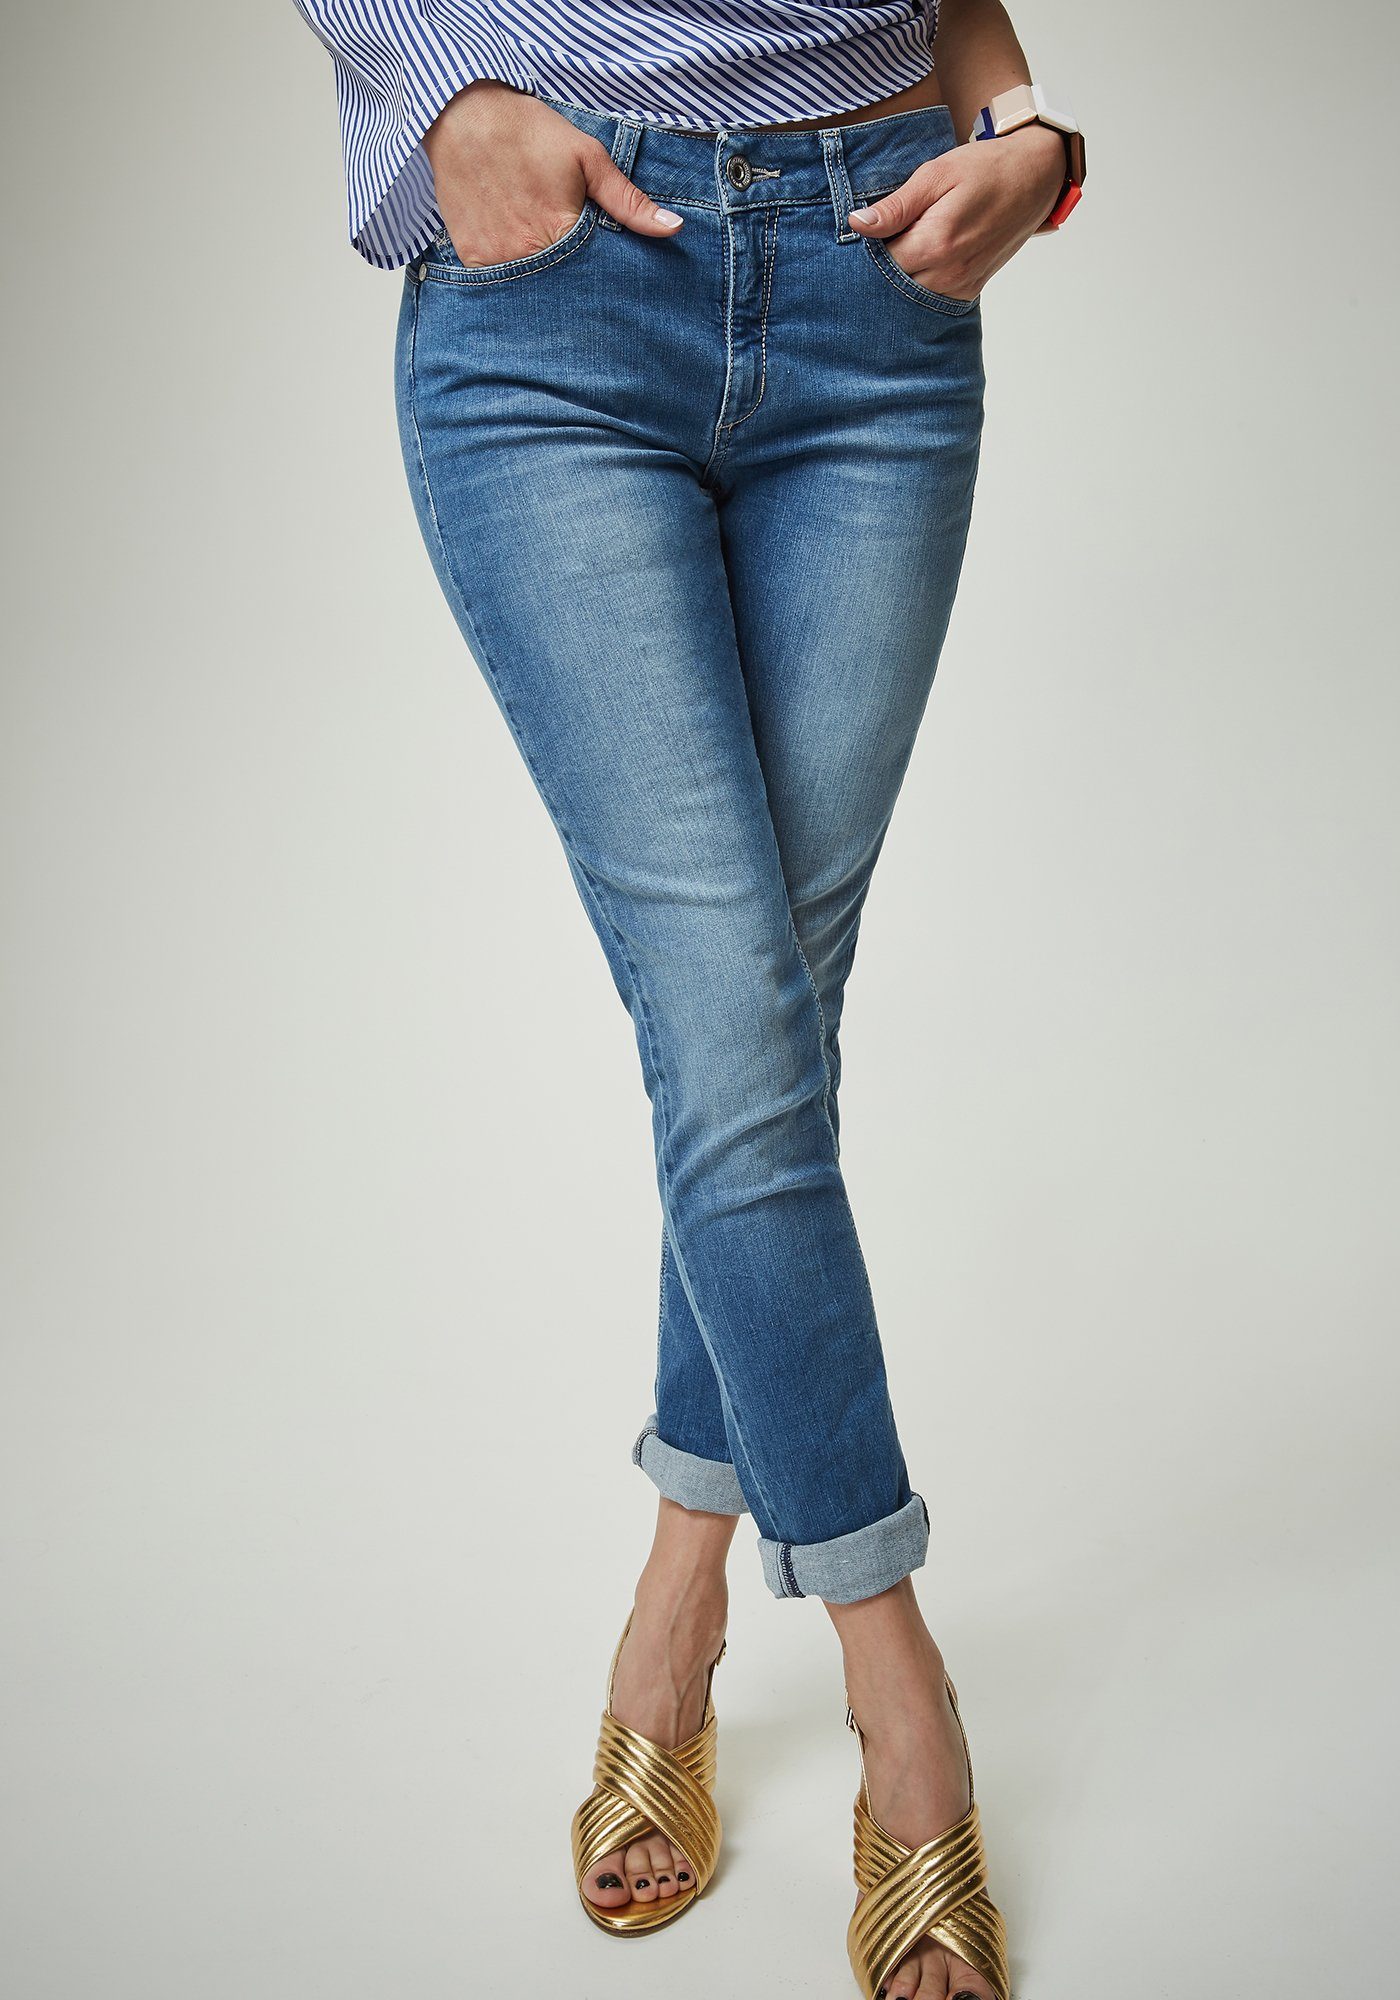 Pierre Cardin NU 15% KORTING: PIERRE CARDIN Jeans mit Glitzernieten - Skinny Fit My Favourite